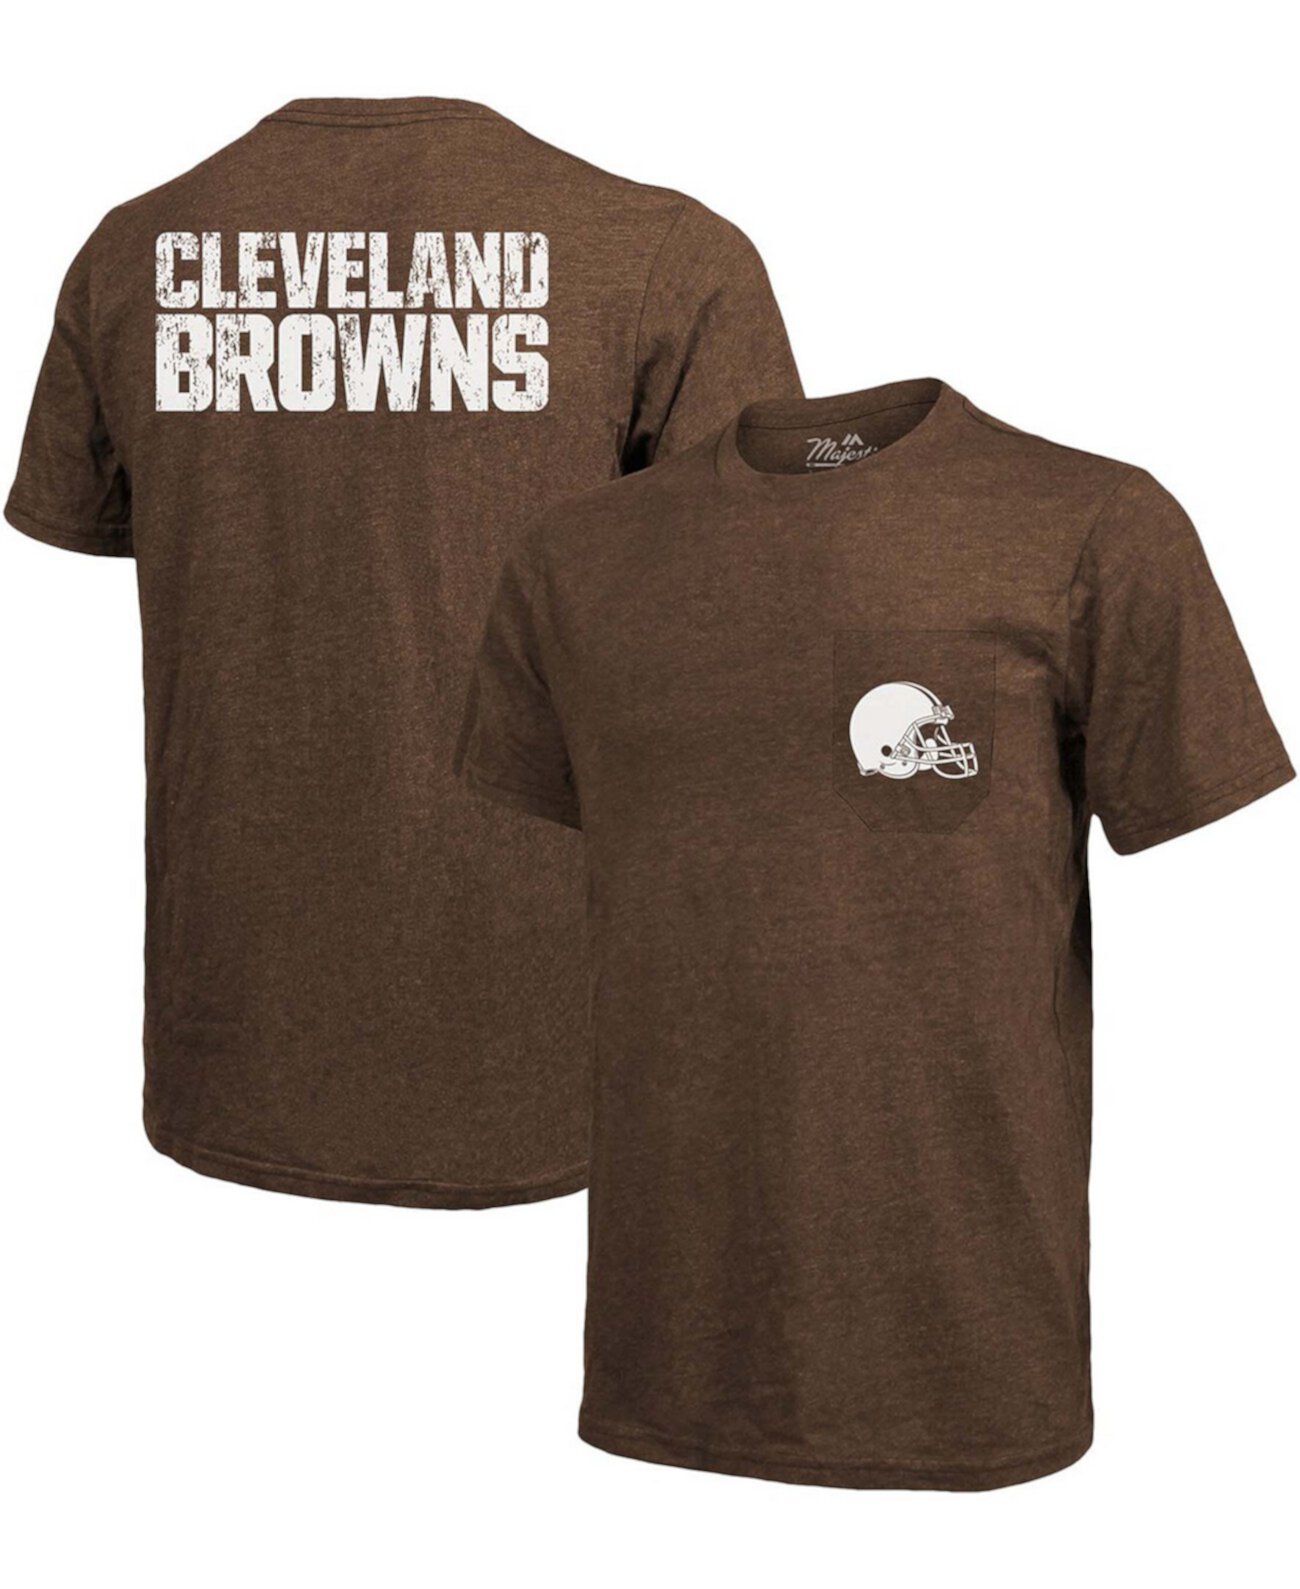 Футболка Cleveland Browns Tri-Blend Pocket Pocket - Коричневый Majestic